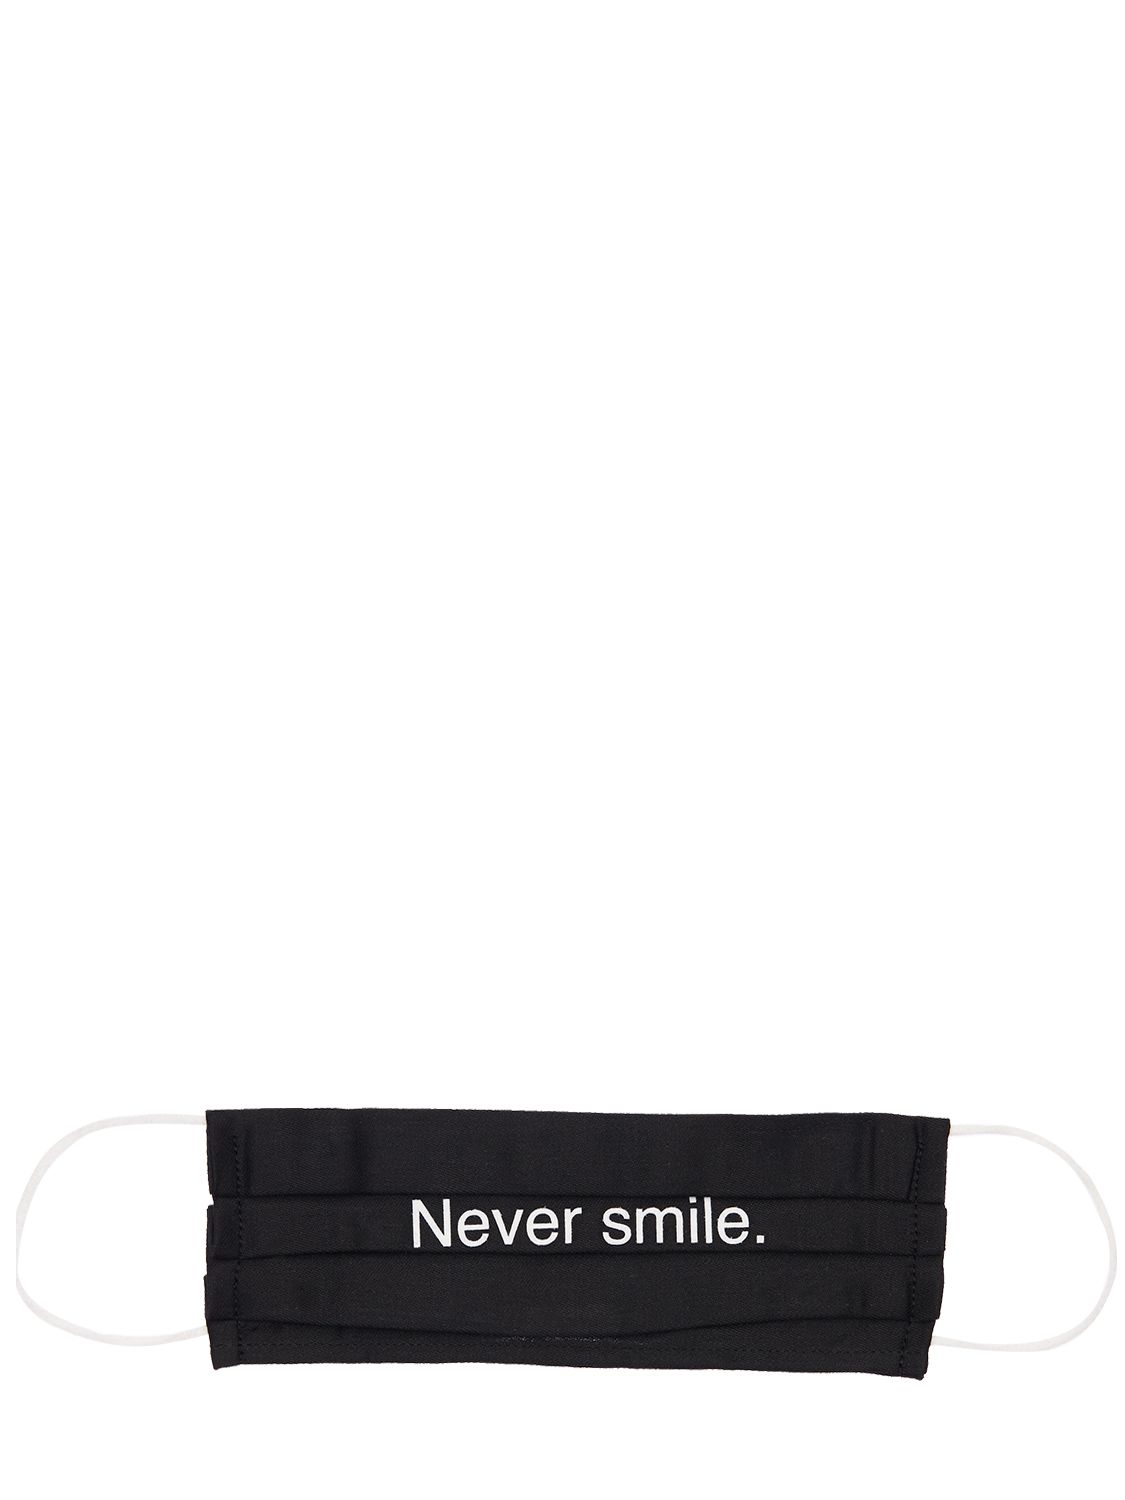 Never Smile. Mask